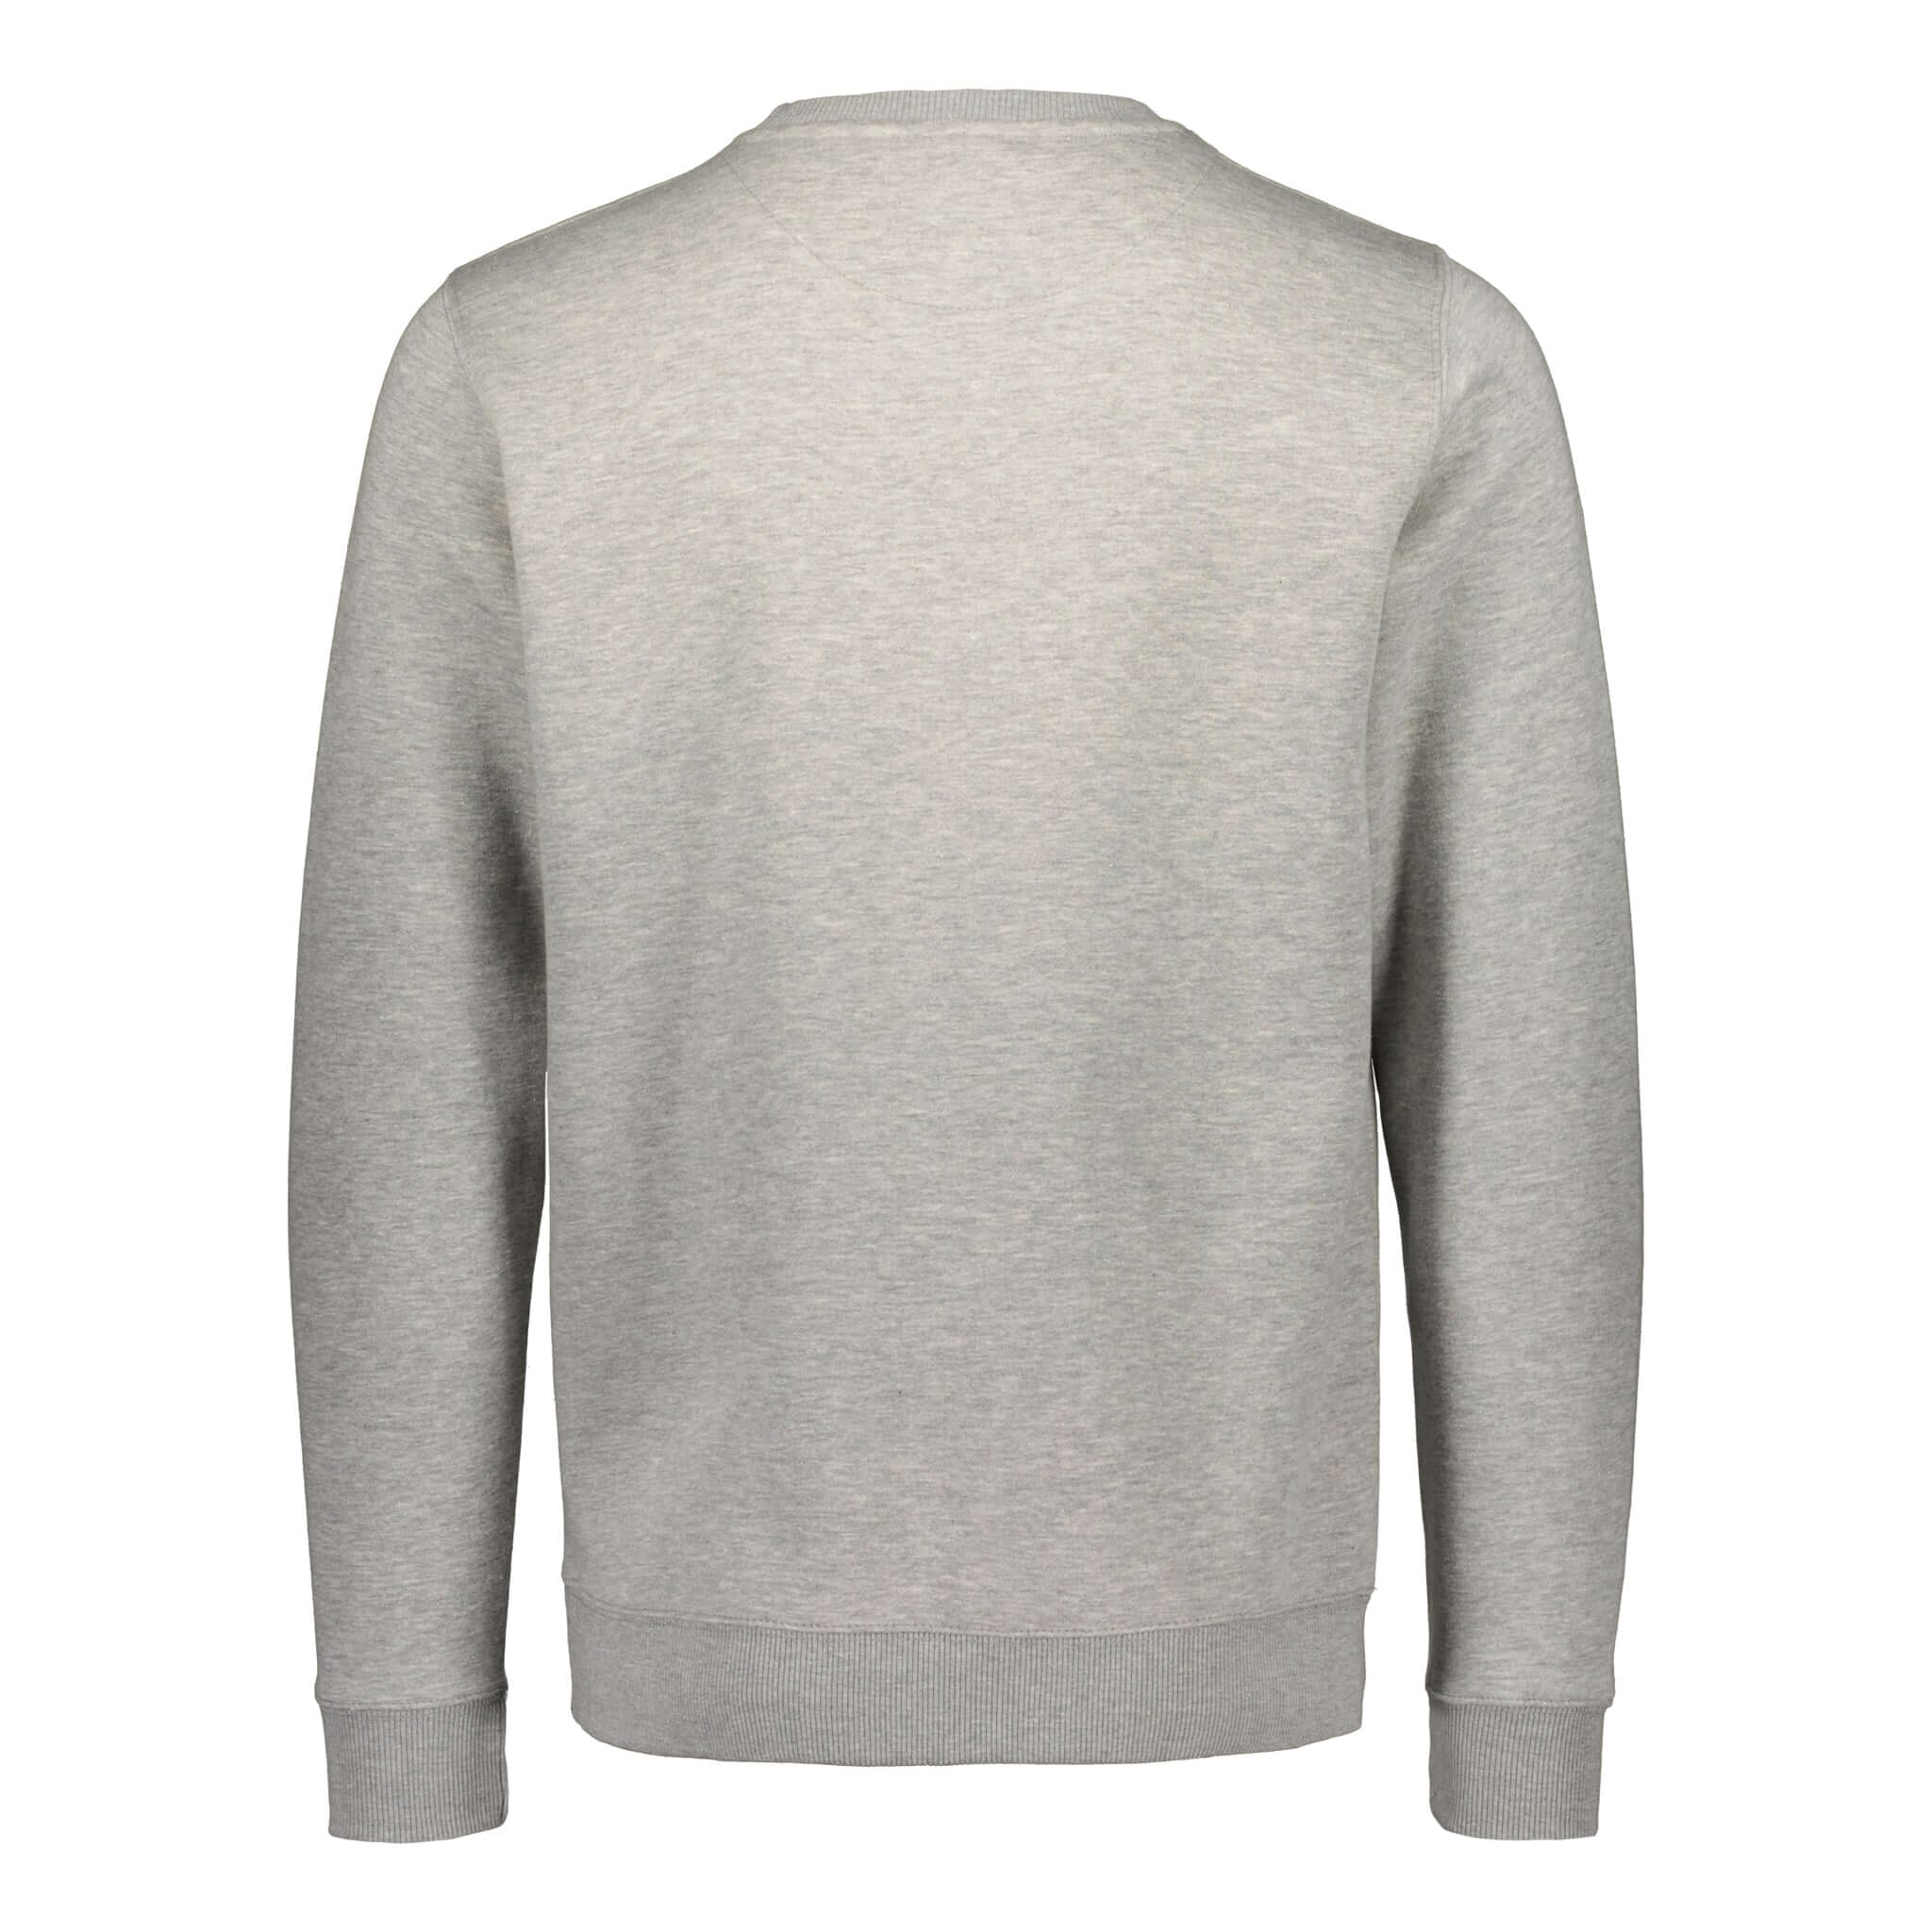 ENCE Sweatshirt Grey | ENCE Shop